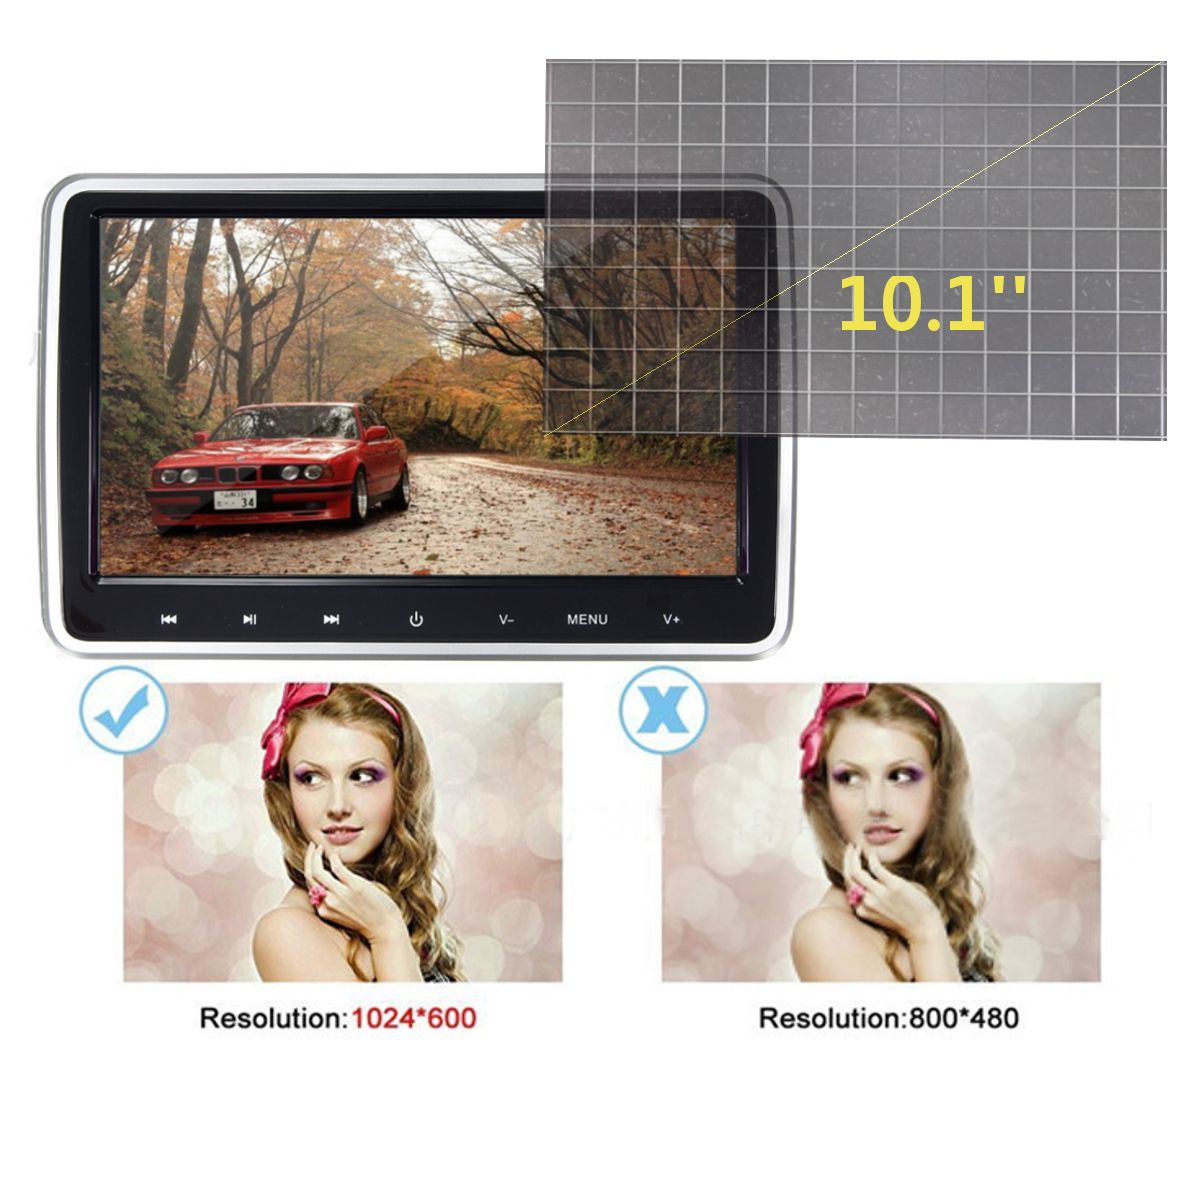 101-Inch-HD-Port-Car-Video-LCD-Screen-Monitor-Pillow-Head-Rest-DVD-FMIR-Game-Player-1163463